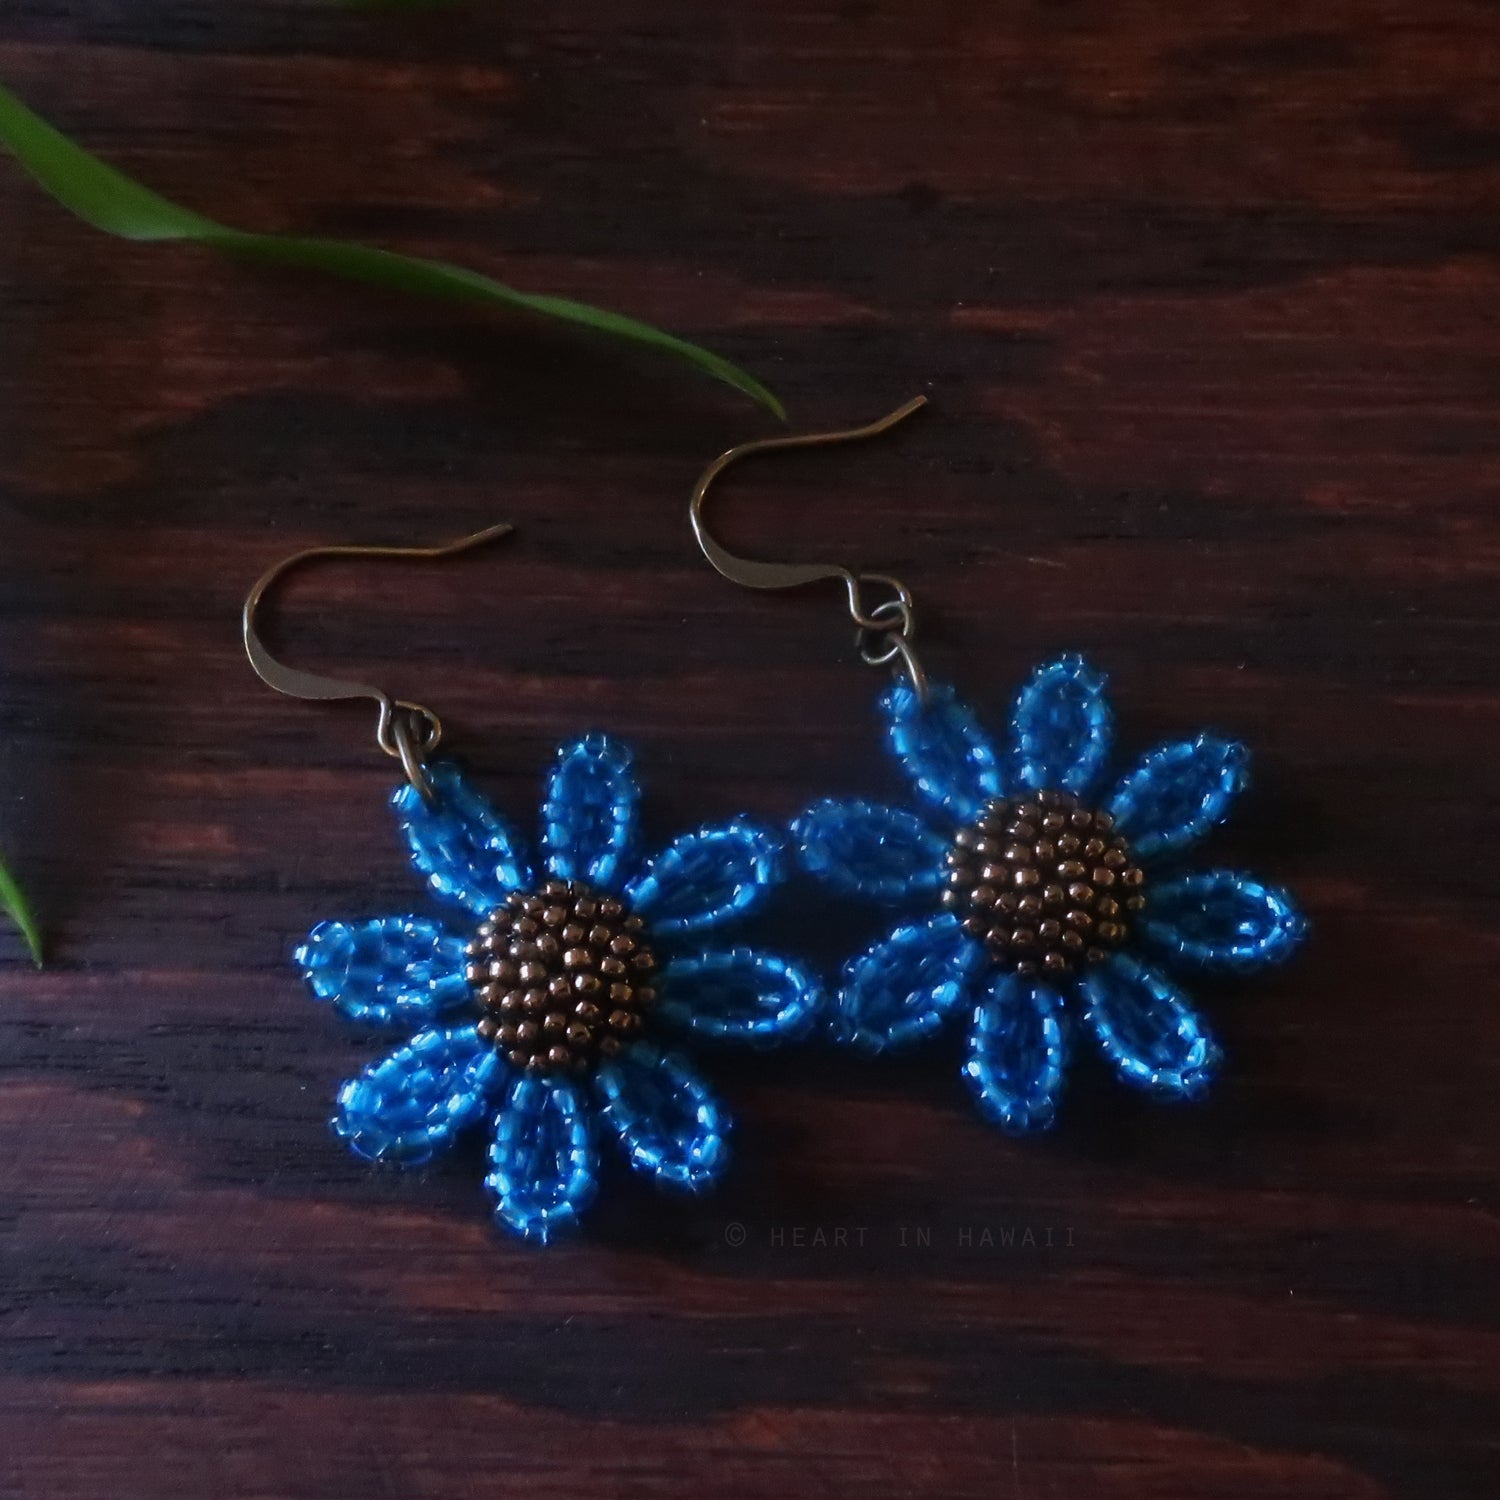 Heart in Hawaii Beaded Cosmos Flower Earrings - Aqua Blue